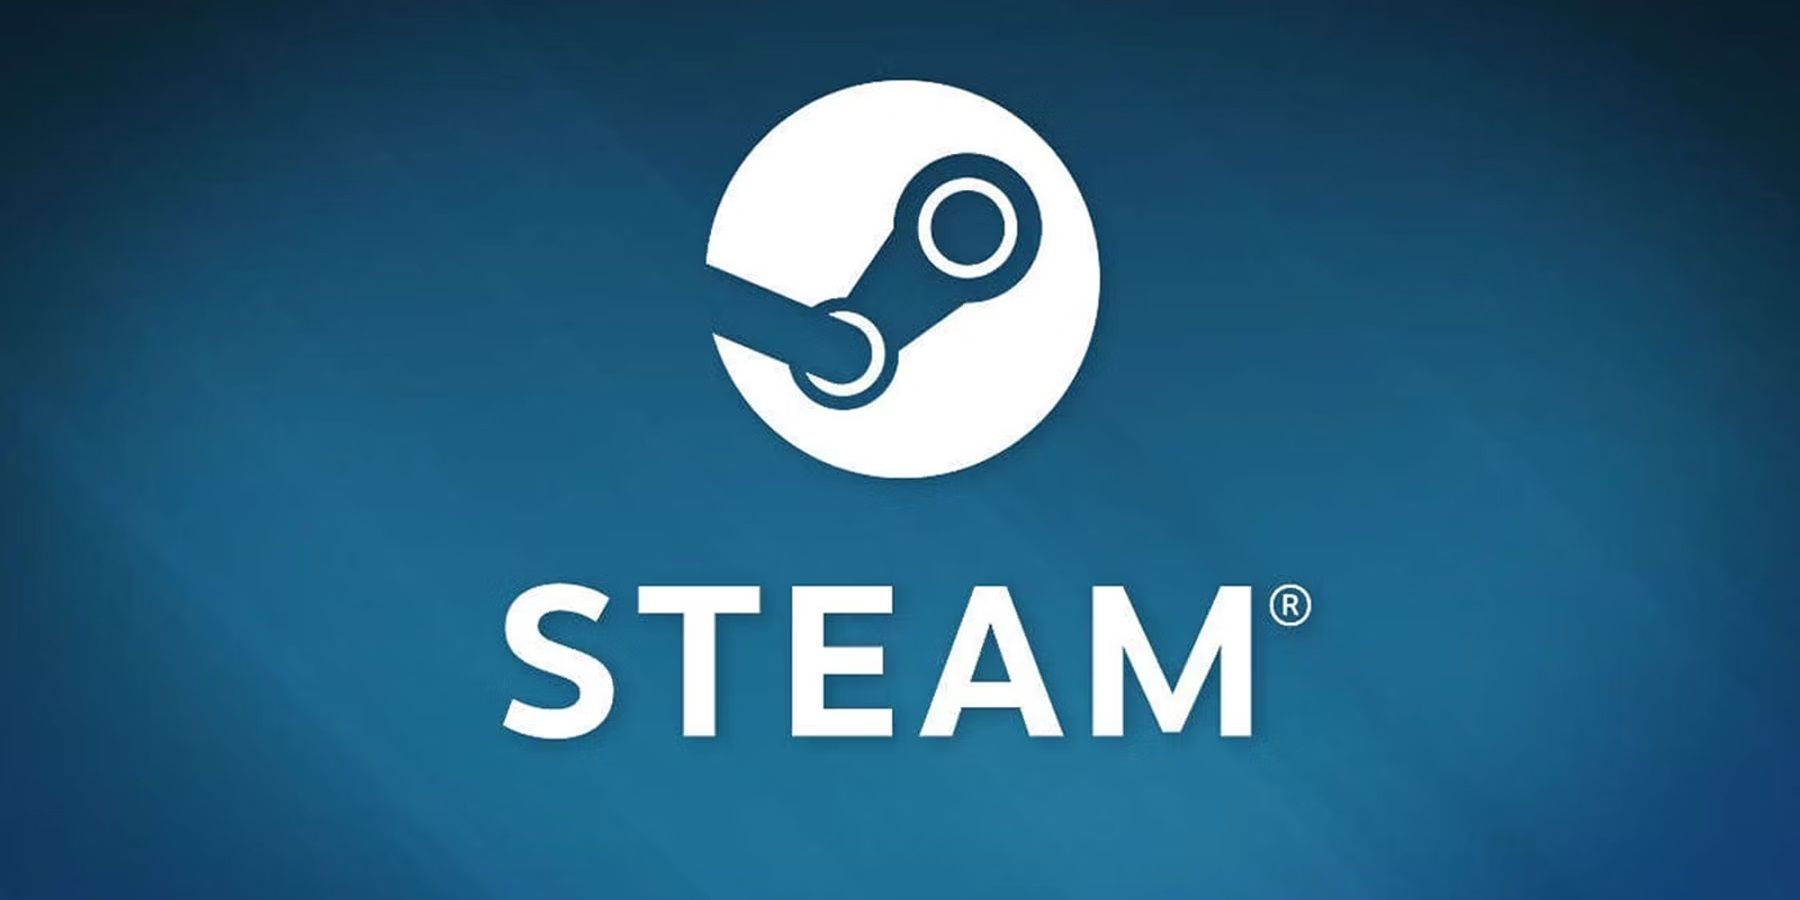 steam logo light blue background